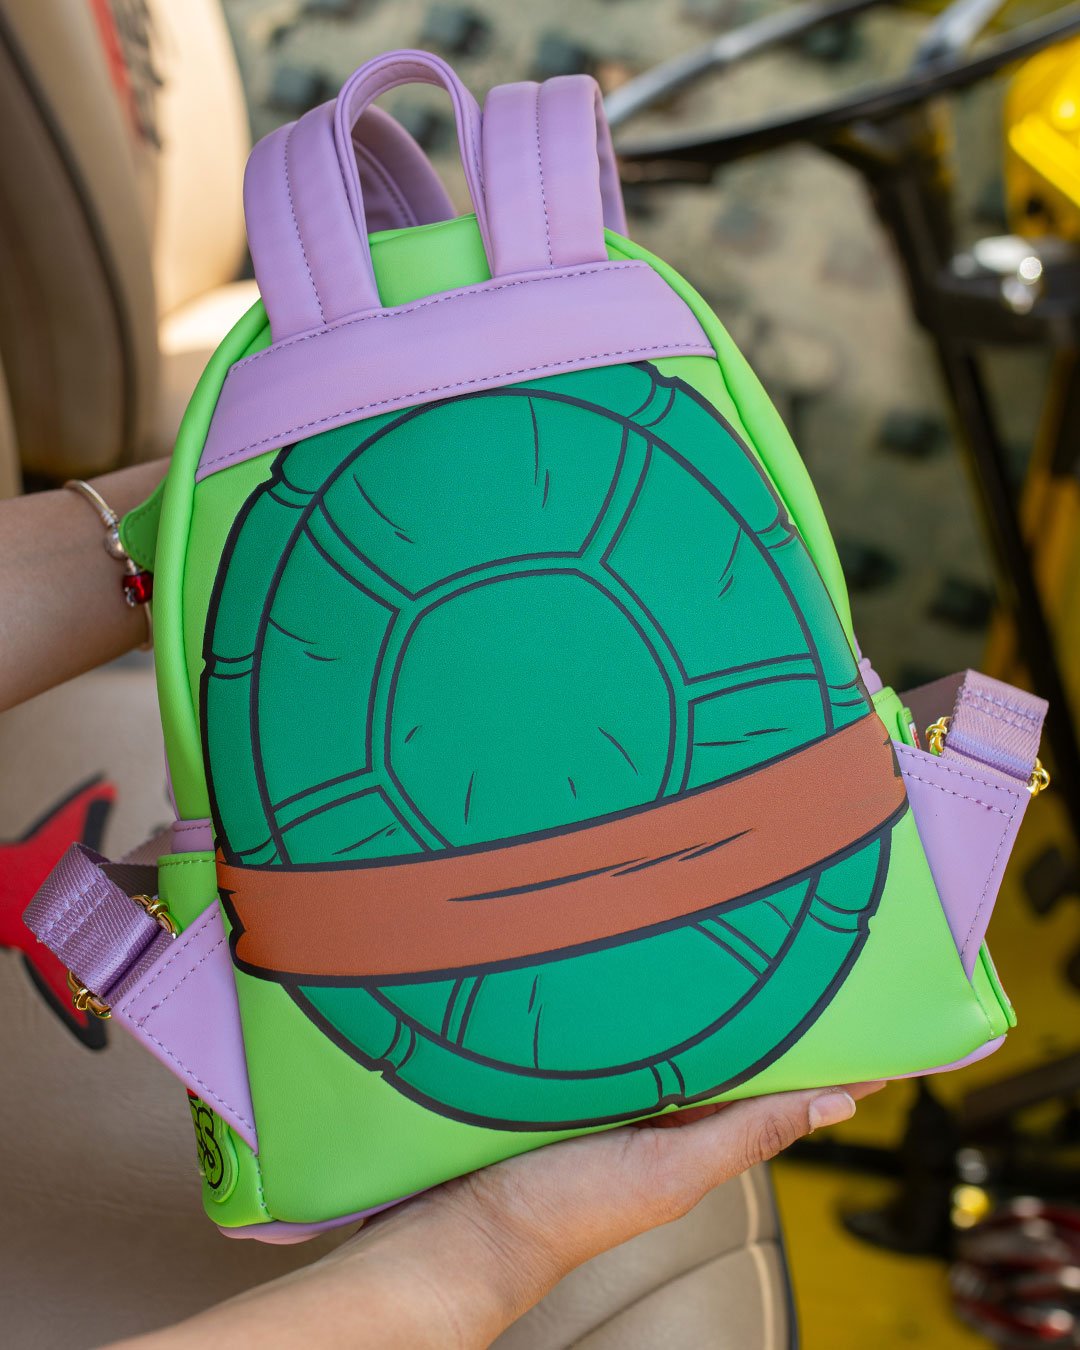 671803390911 - 707 Street Exclusive - Loungefly Nickelodeon TMNT Donatello Cosplay Mini Backpack - IRL 02